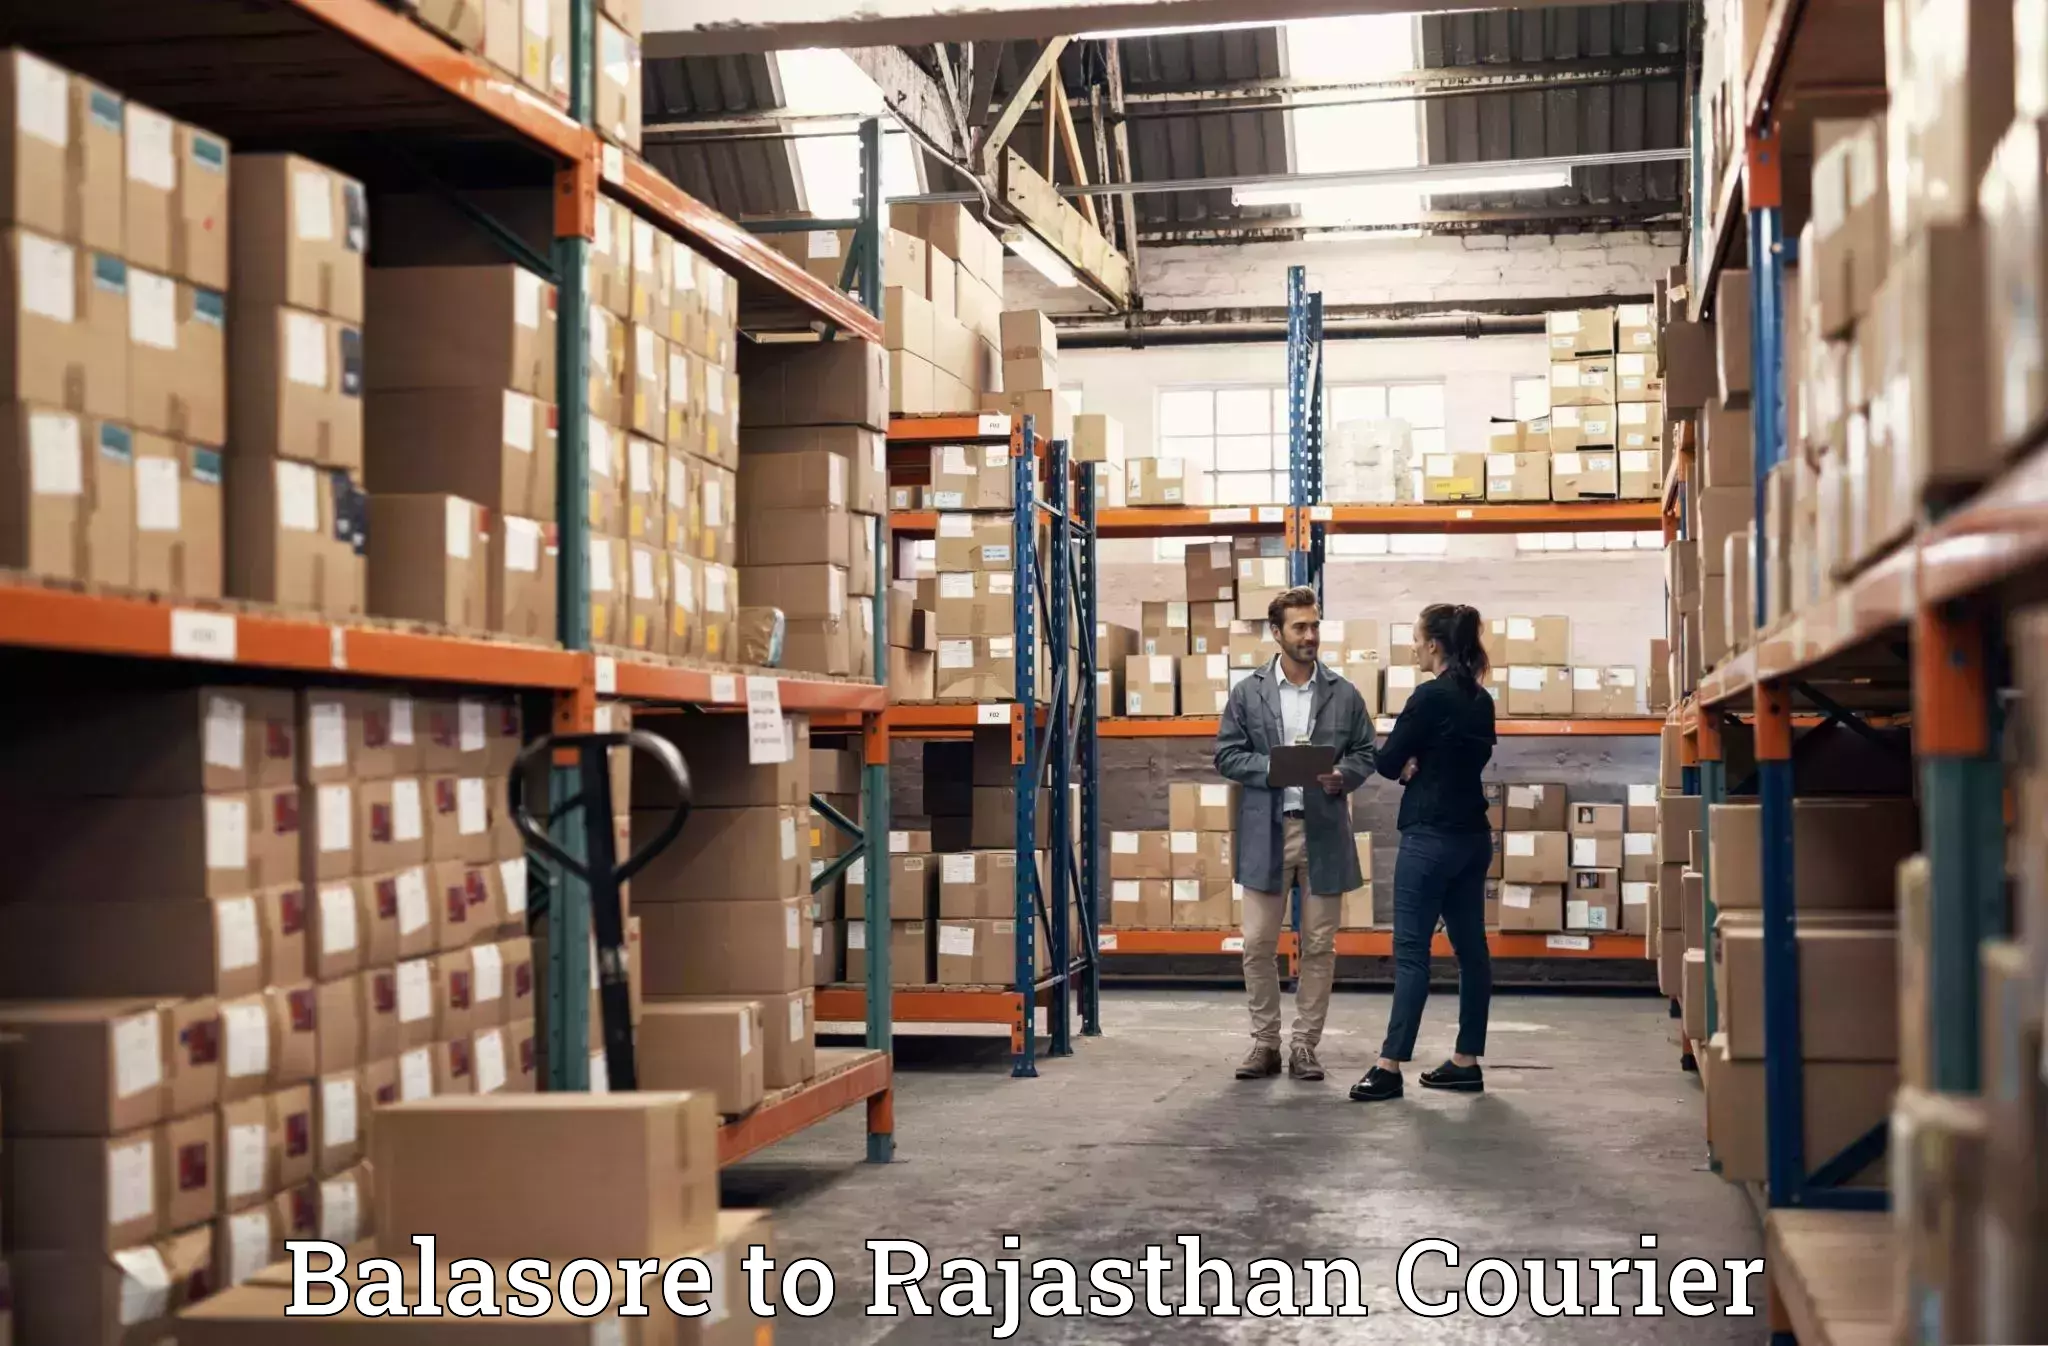 Seamless moving process Balasore to Mathania